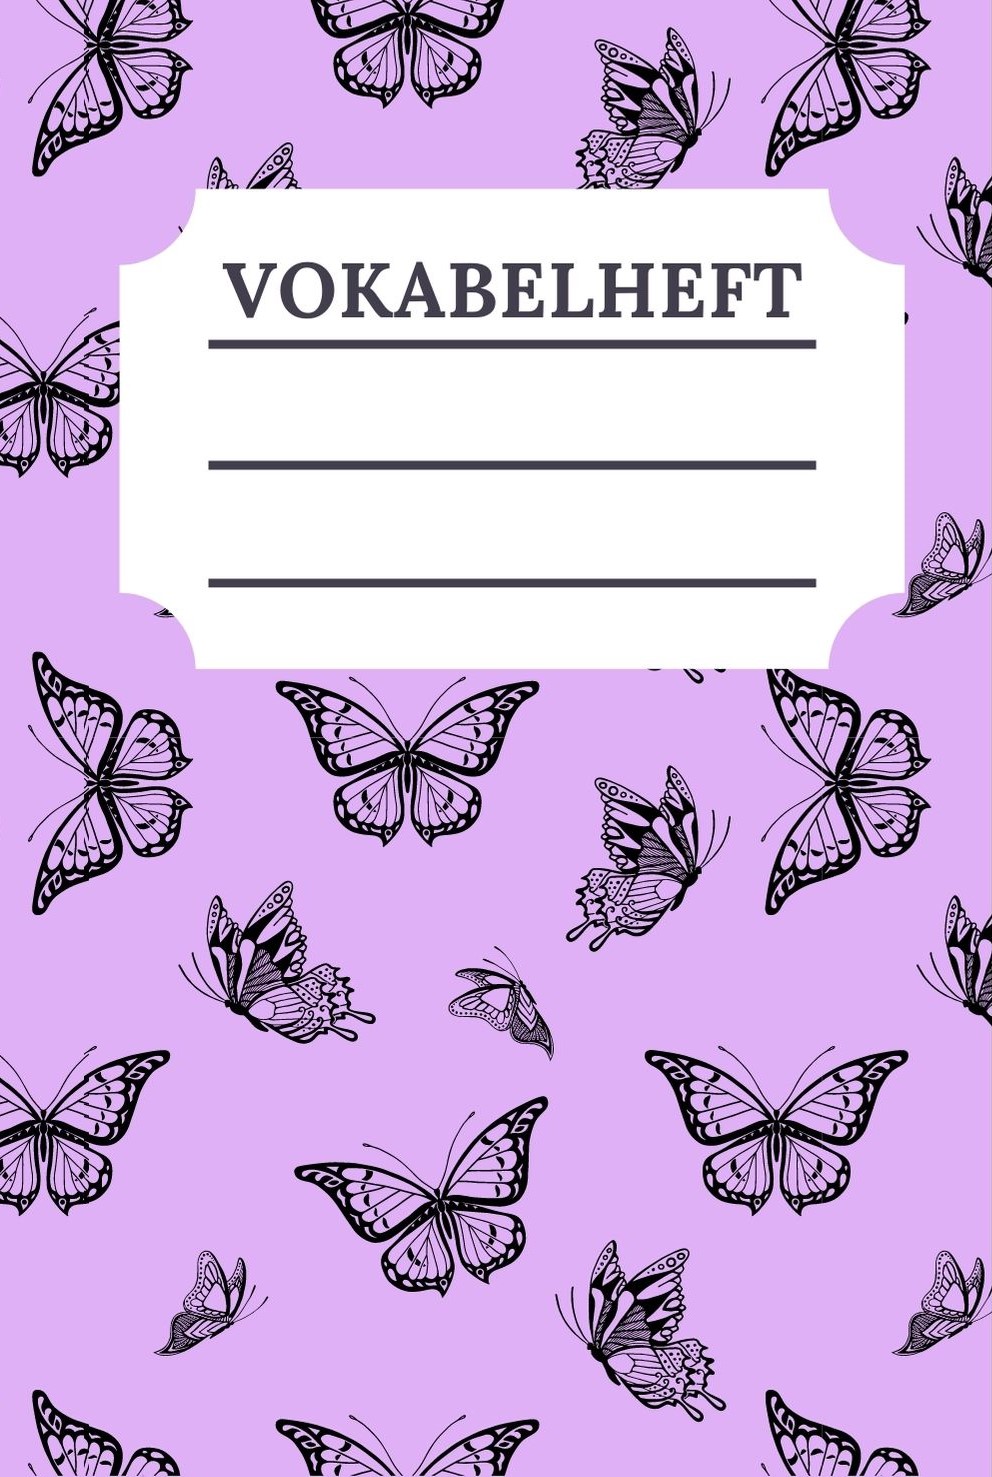 Vokabelheft - Design Schmetterling